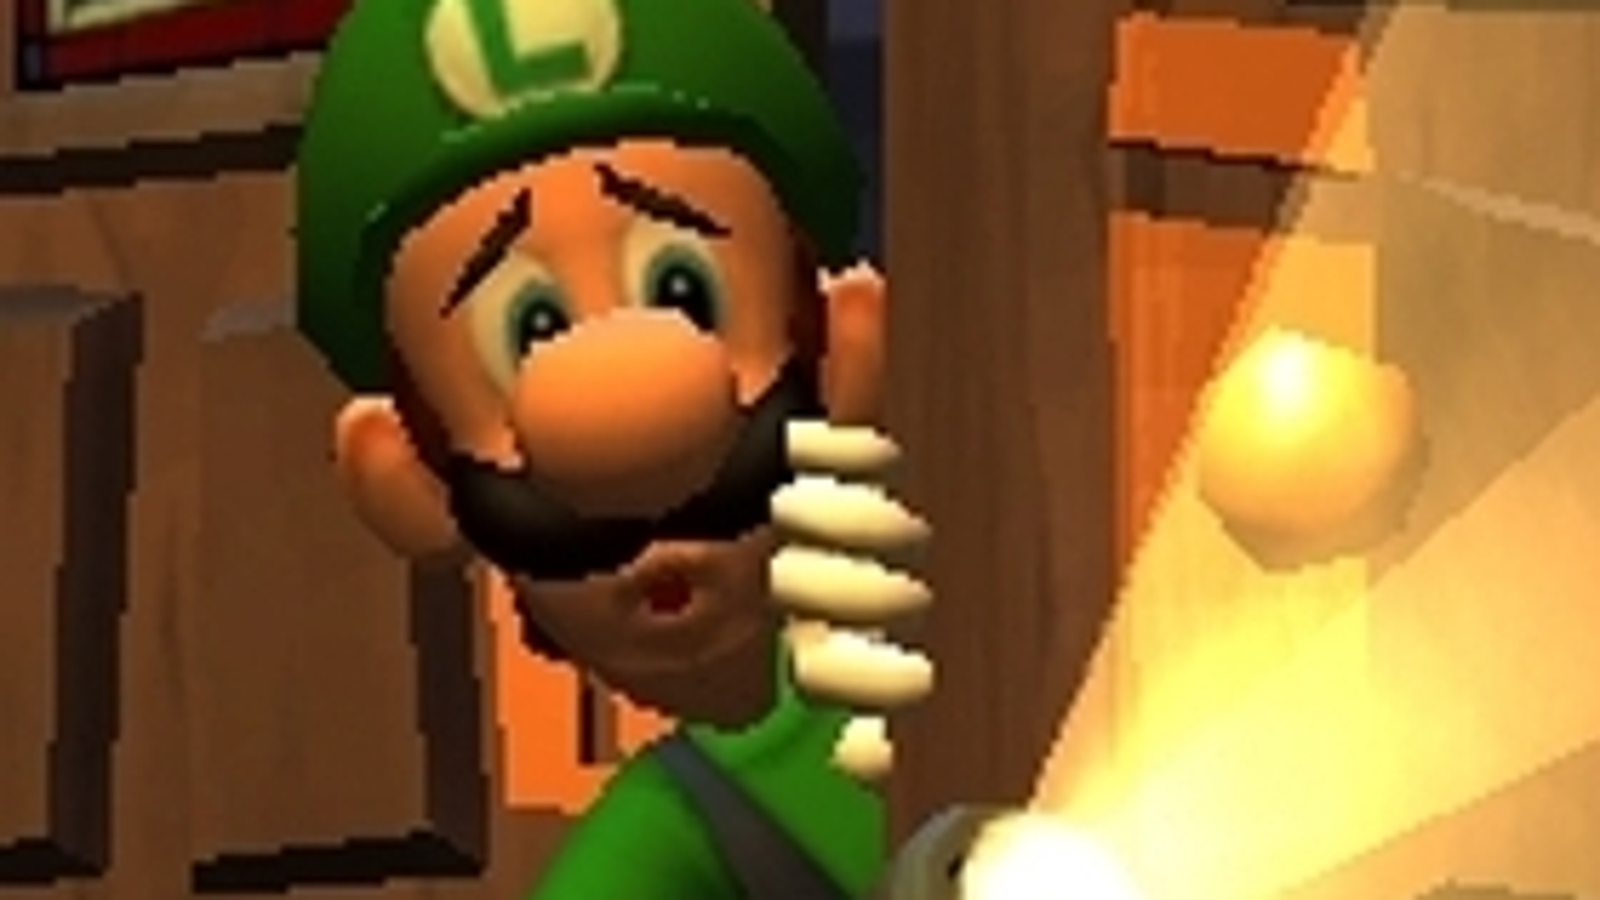 Luigi's Mansion - Nintendo 3DS for sale online